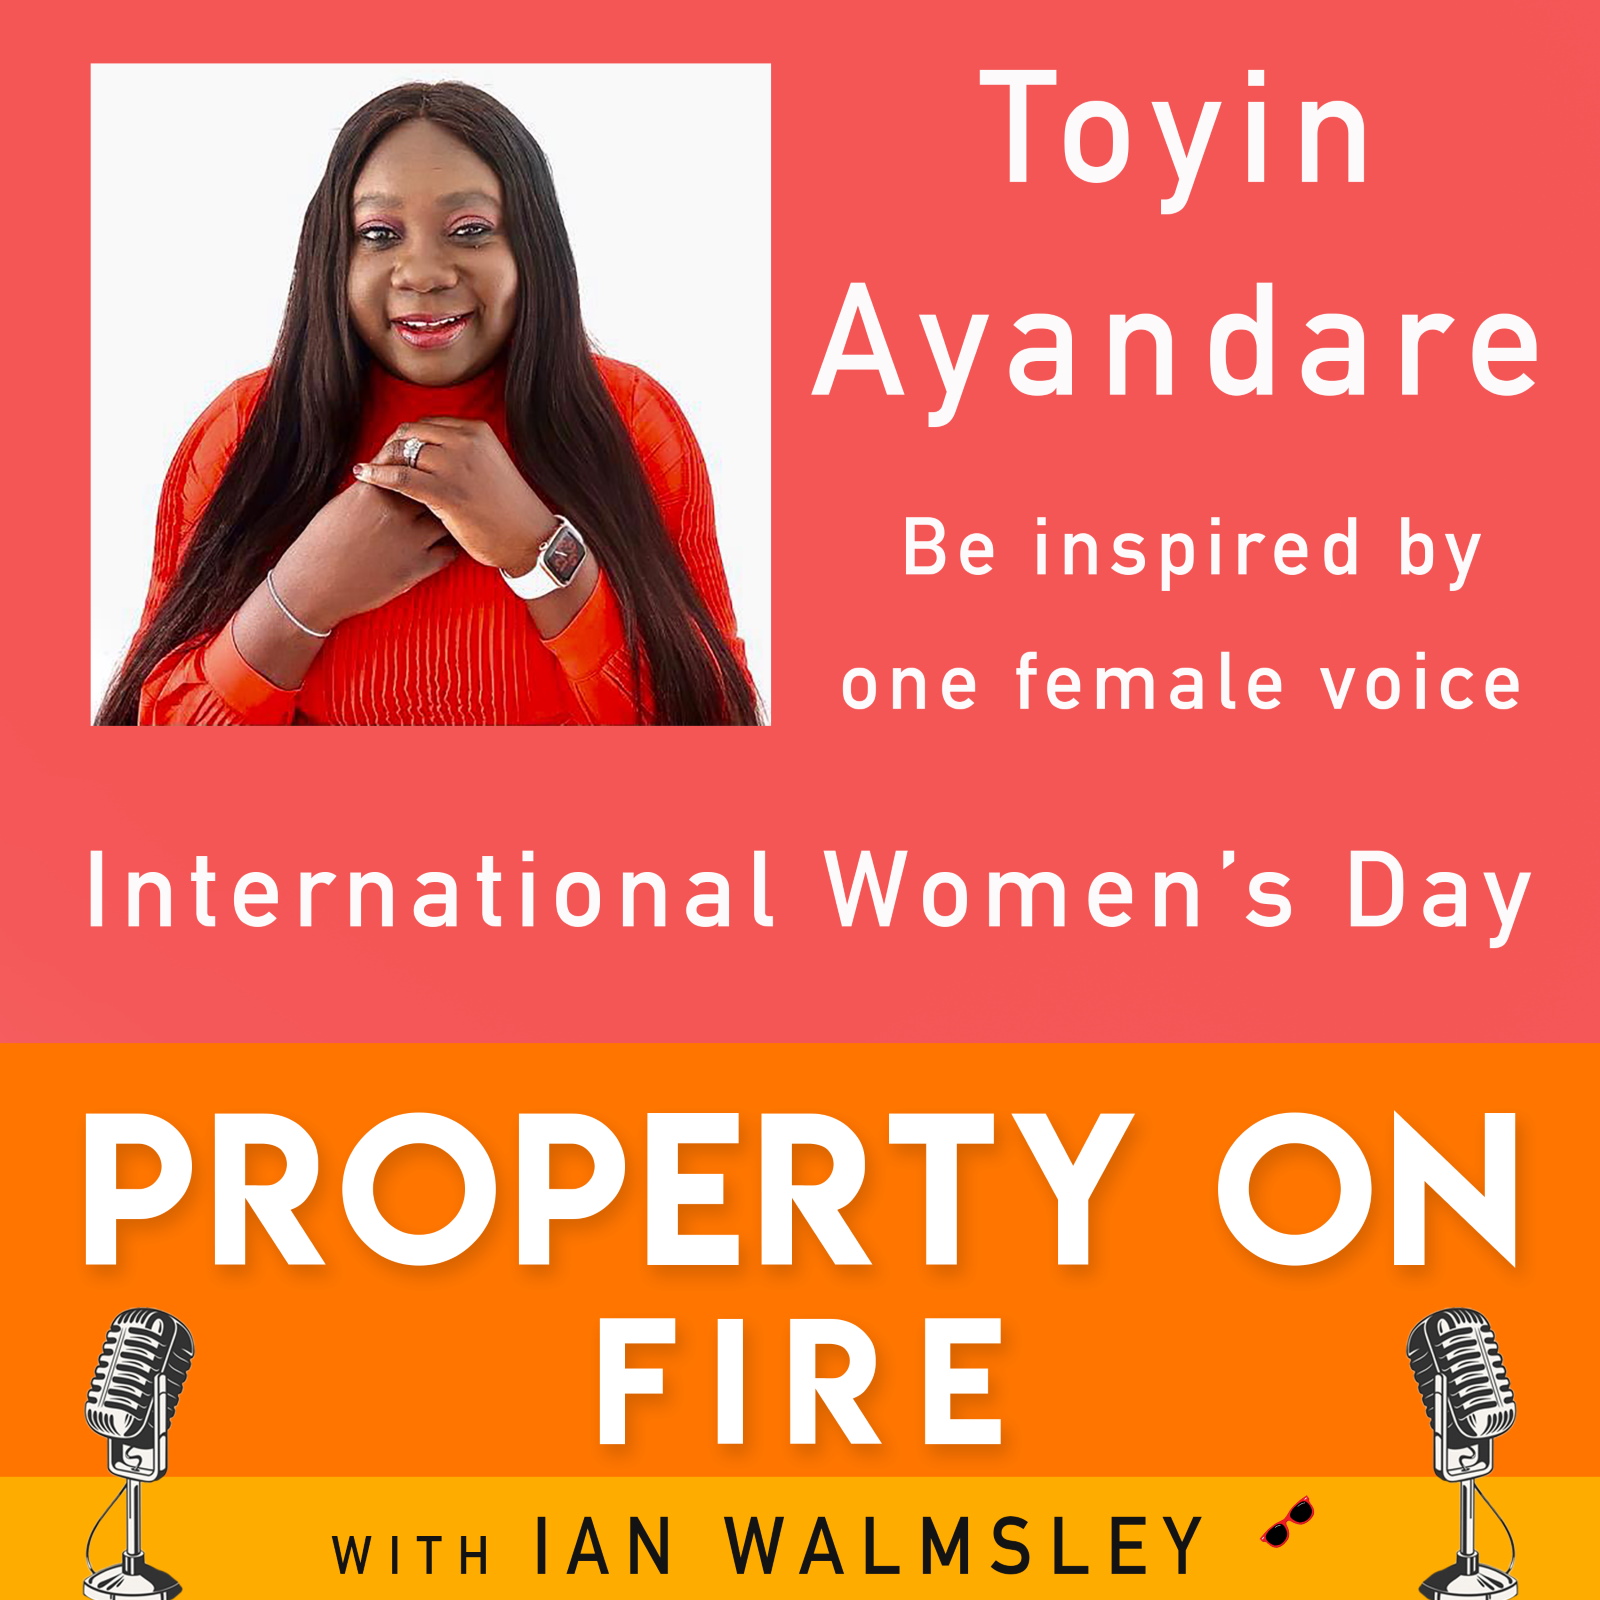 #025 Property Prejudice on International Women's Day - Toyin Ayandare